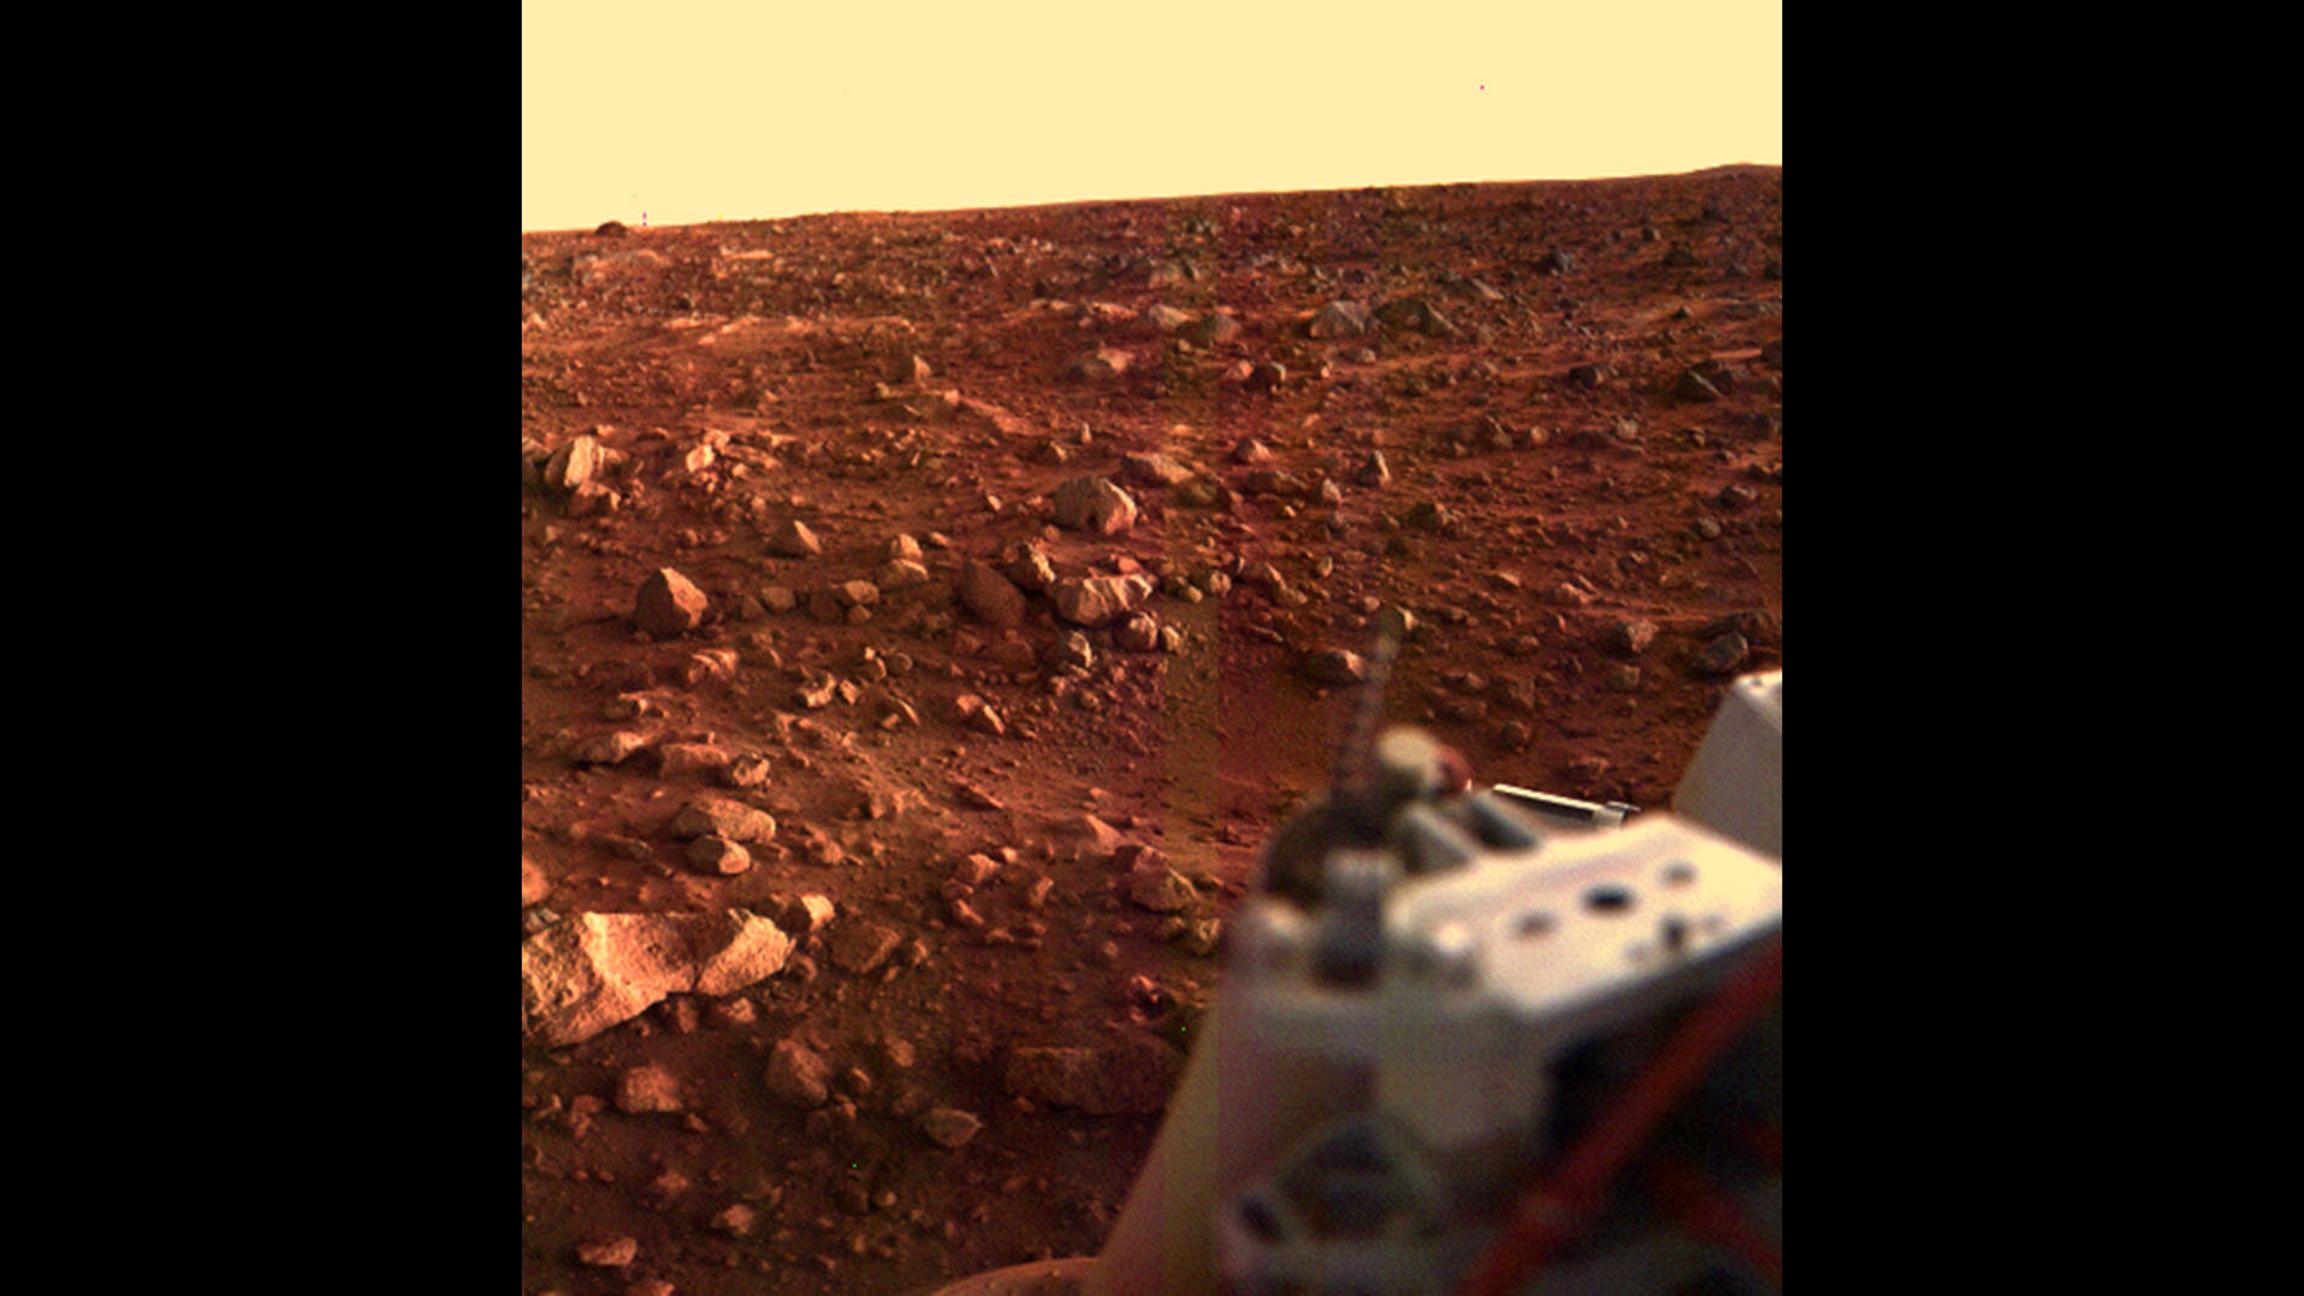 Image from surface of Mars (NASA, 1976)